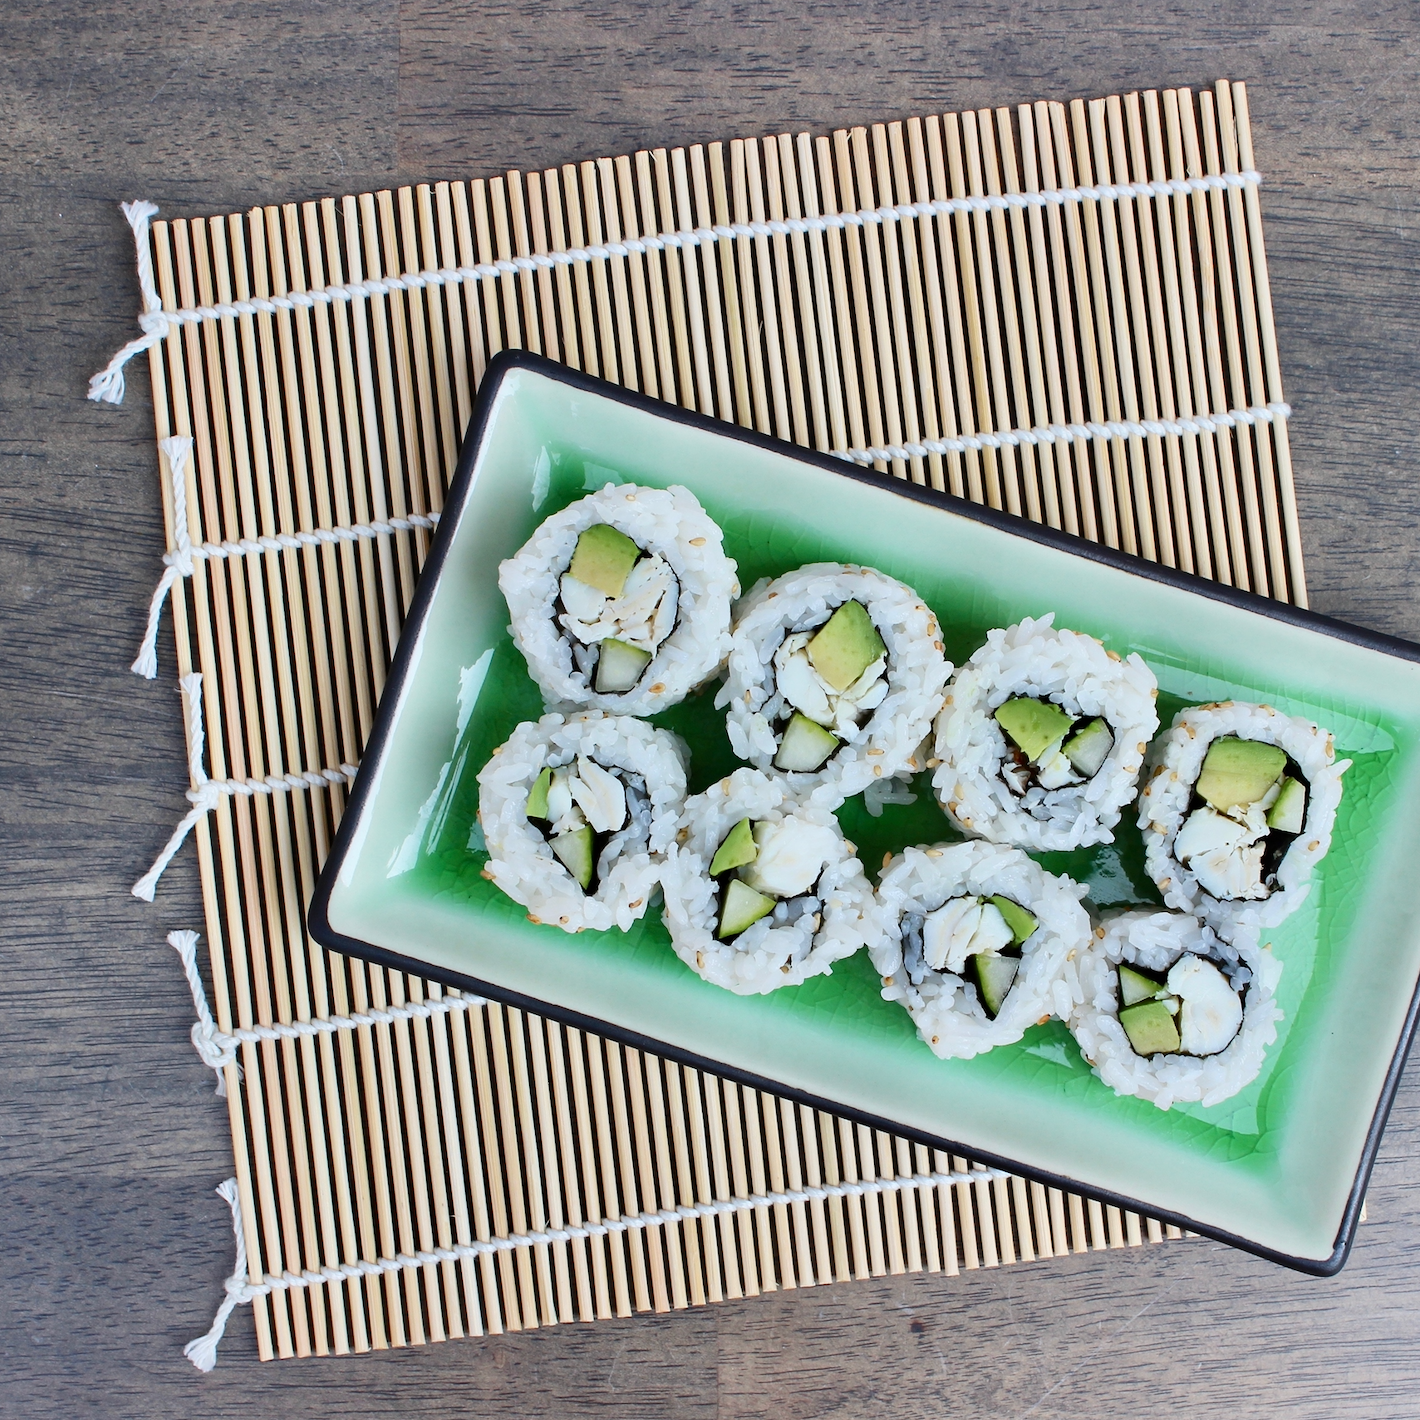 Homemade sushi, make your favorite kind